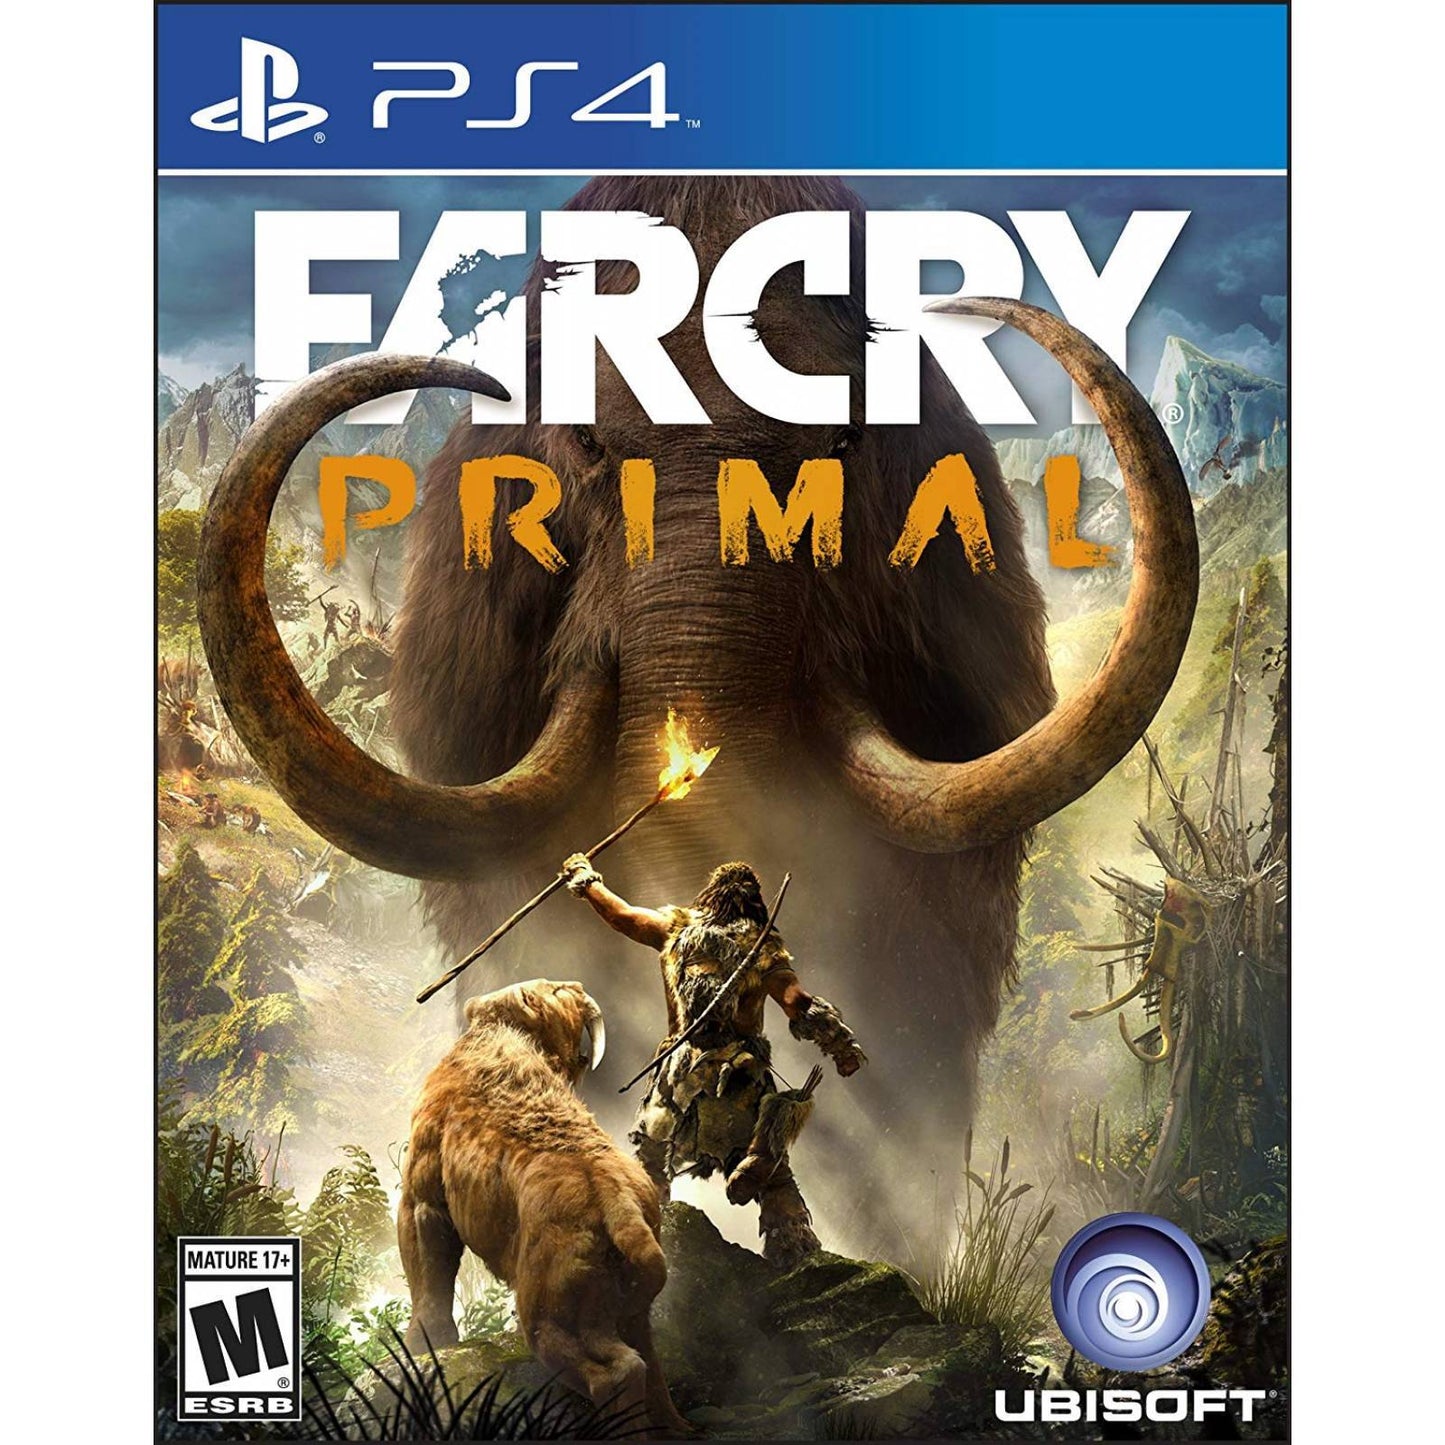 PS4 - FarCry Primal  - Fisico - Usado